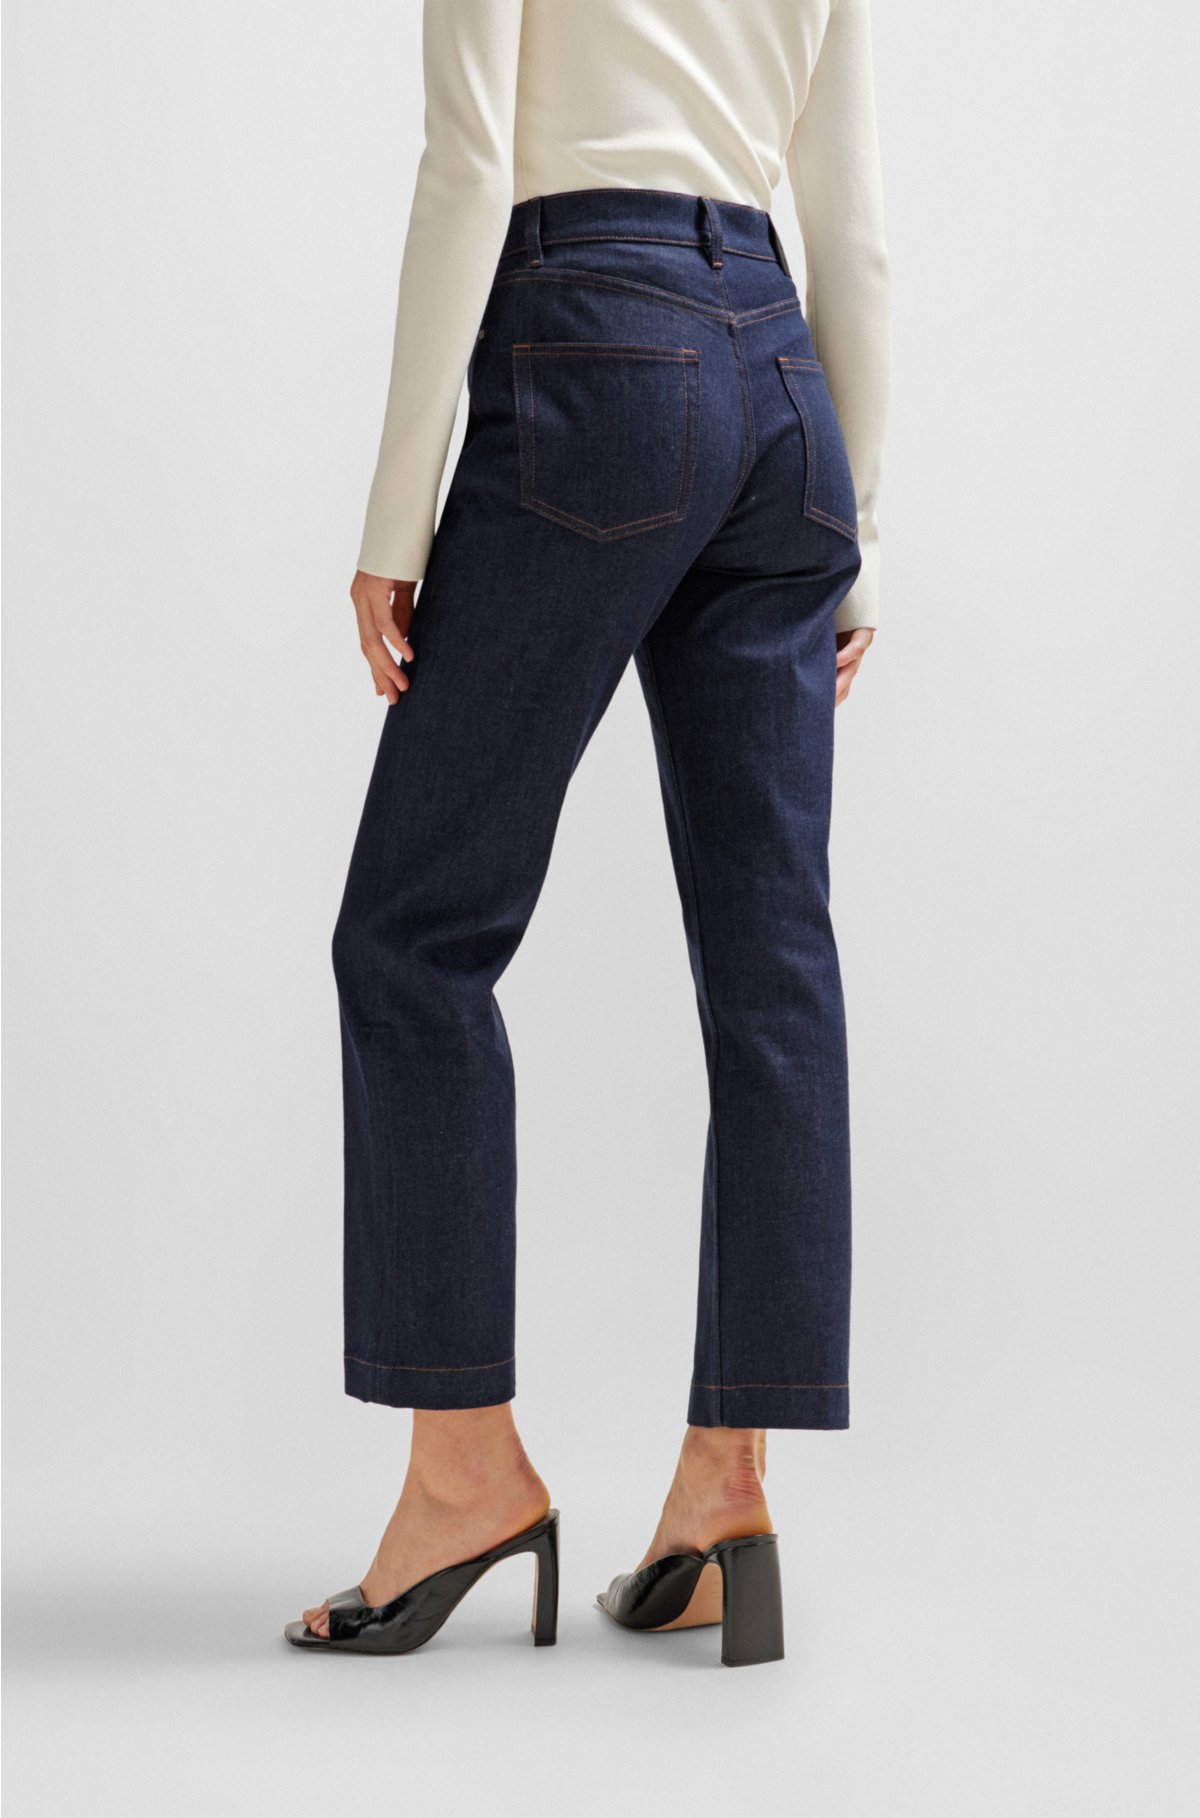 Slim-fit jeans in navy comfort-stretch denim, Dark Blue